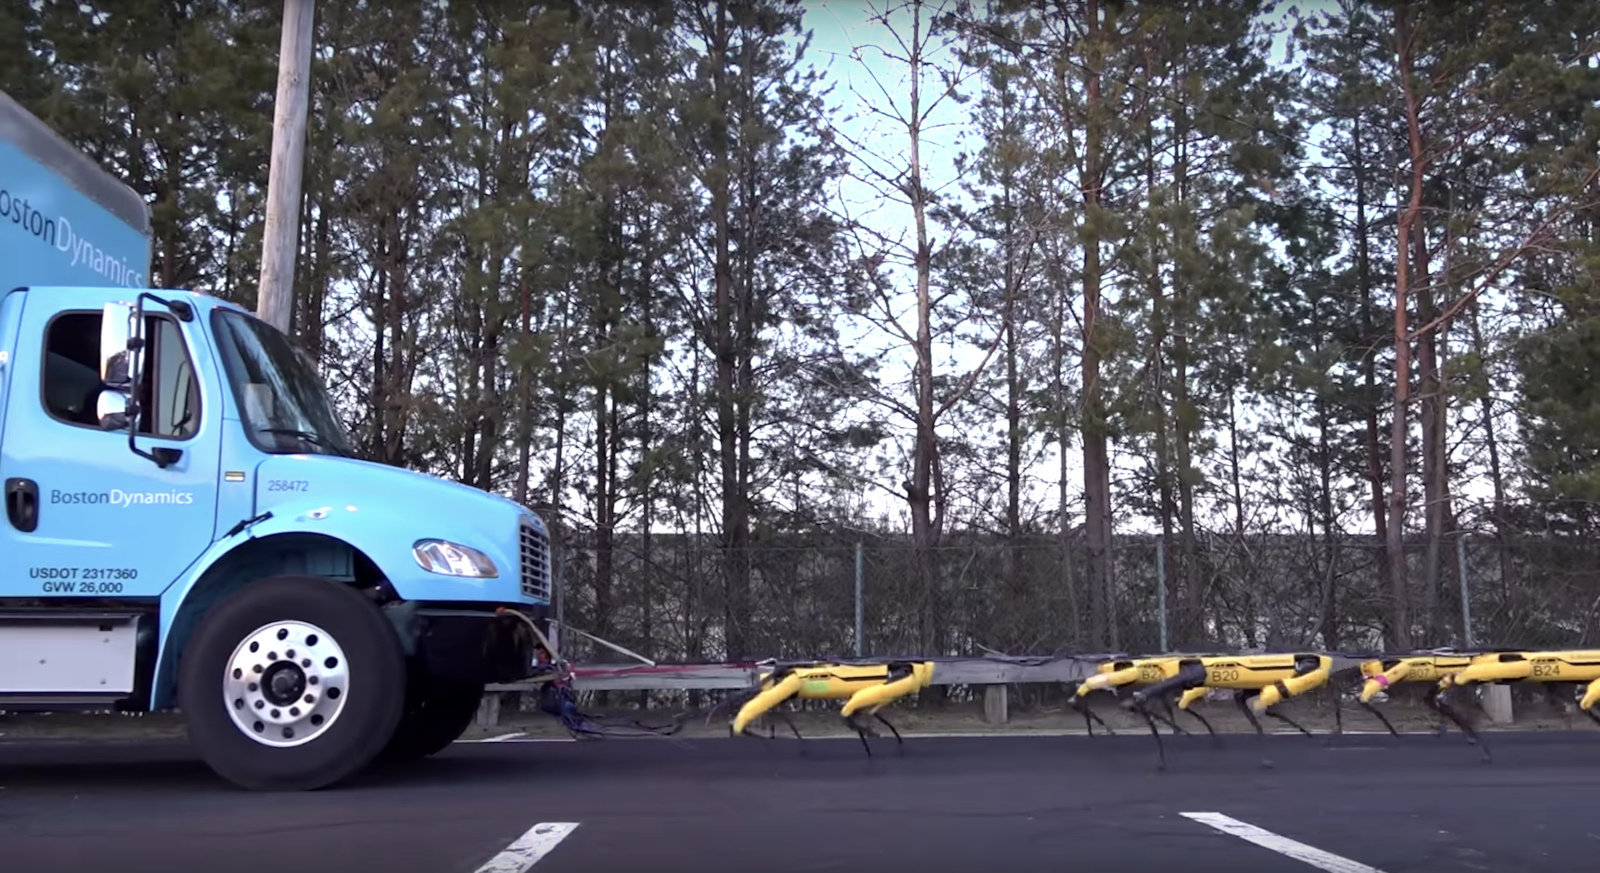 spot-mini-robots-haul-truck